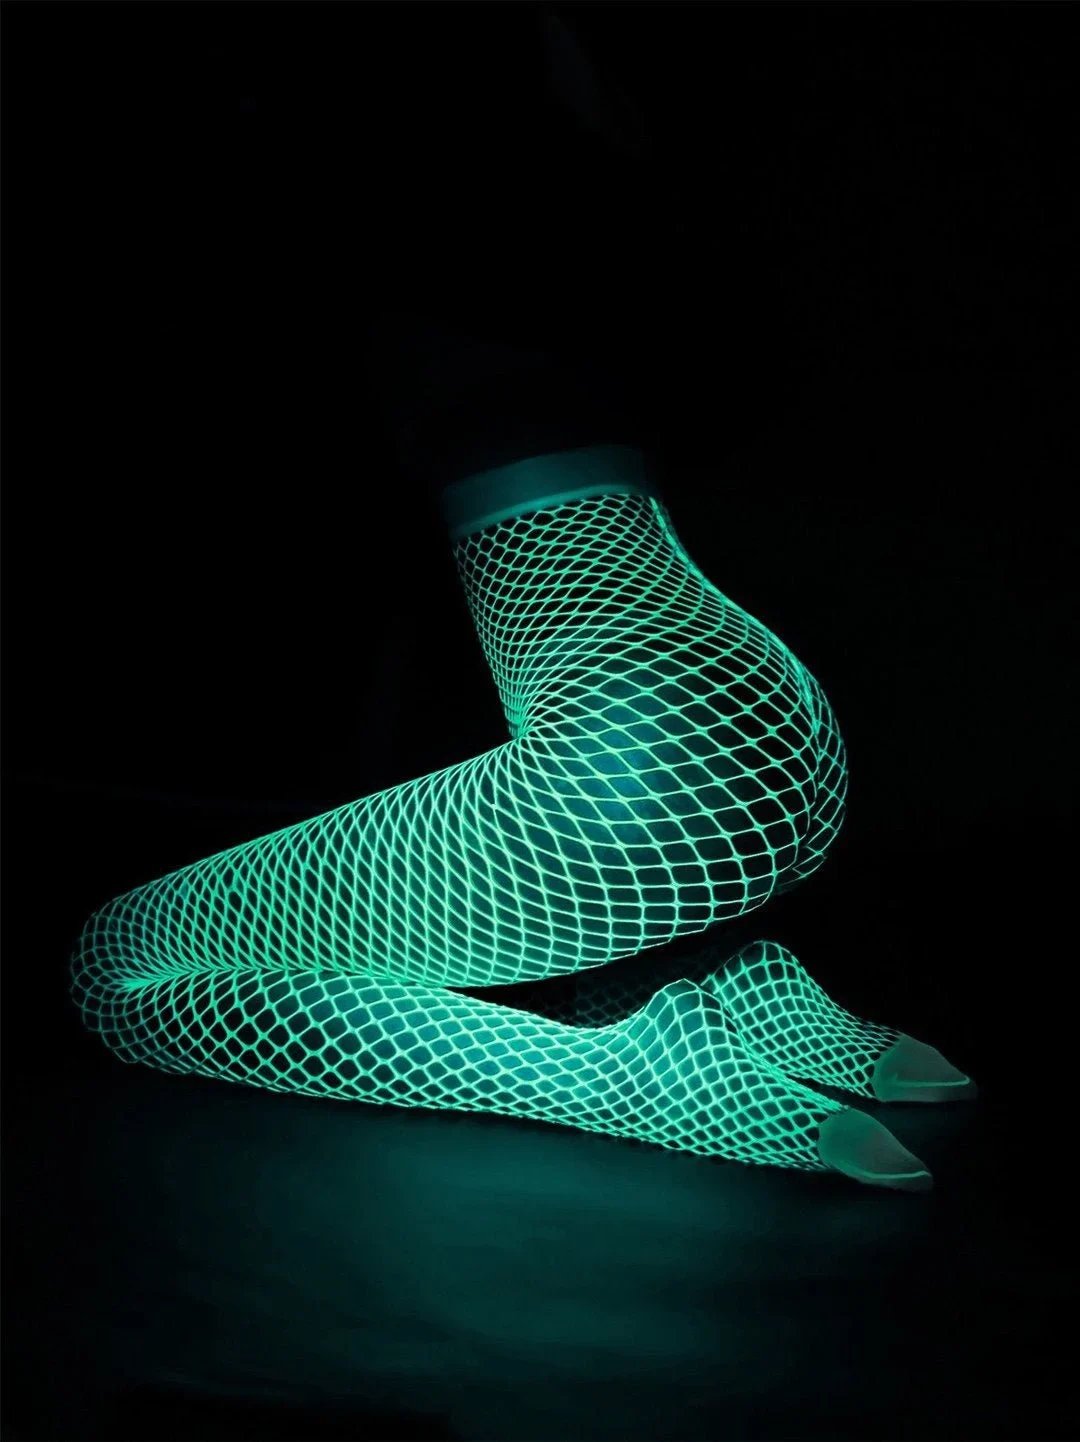 Glow-in-the-dark fishnet stockings